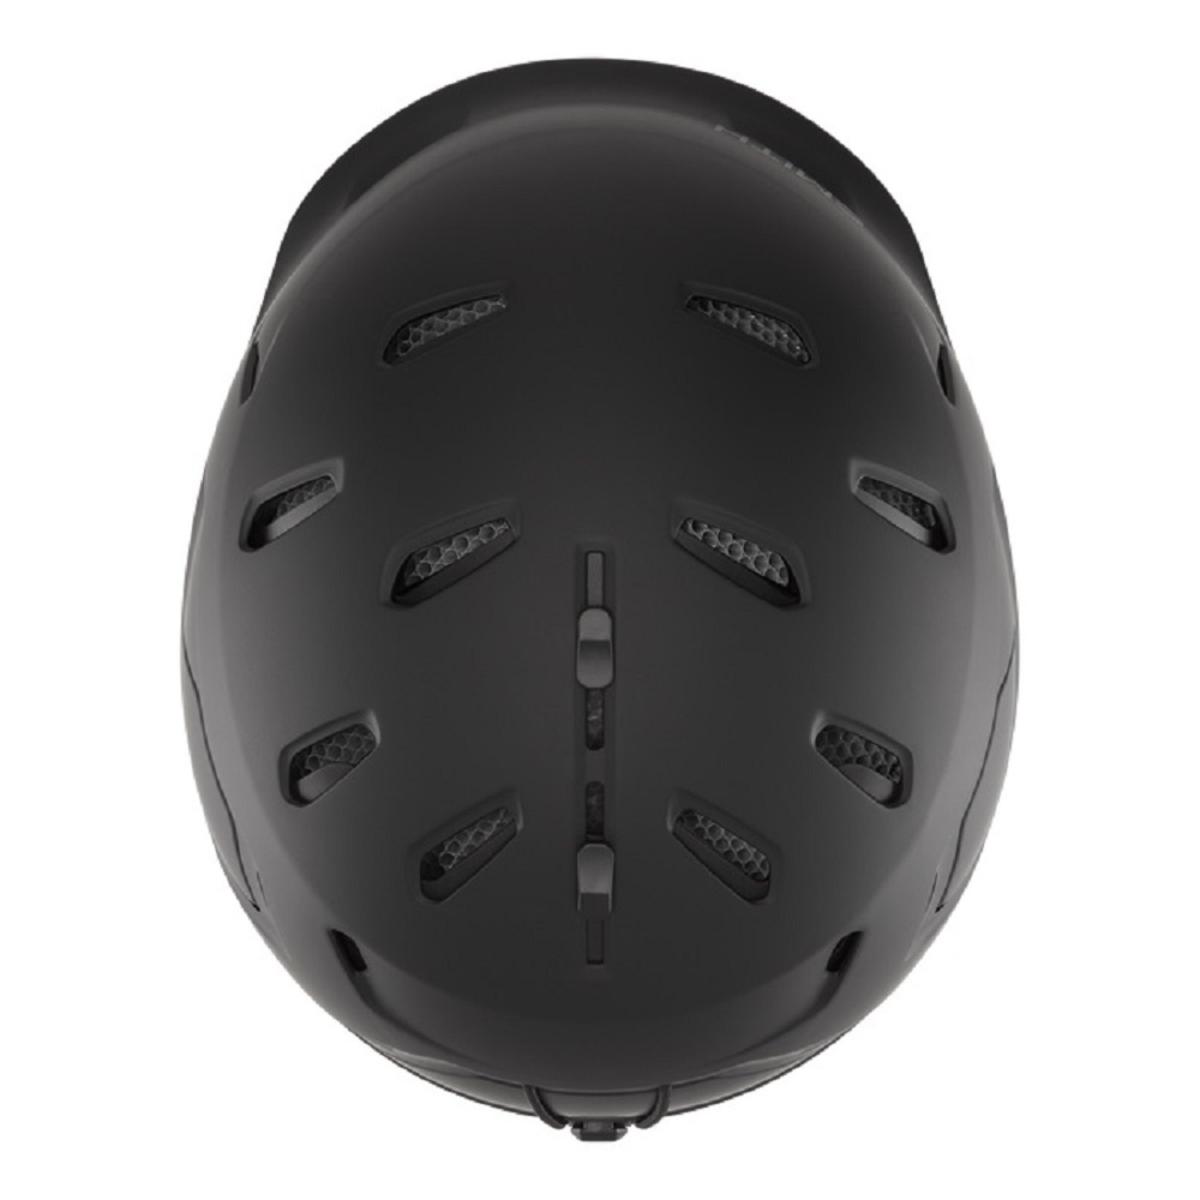 Smith Optics Nexus Mips Helmet